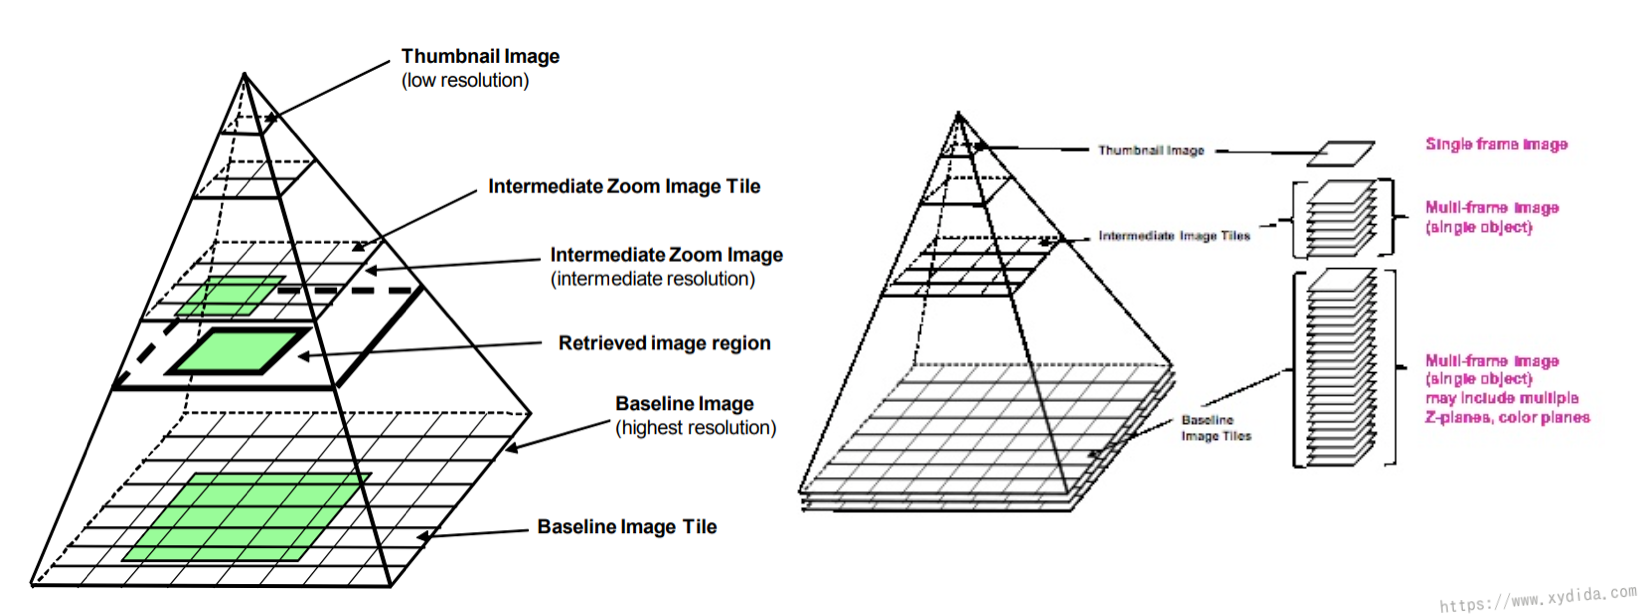 Fig. 2 Pyramid orginazation of WSI